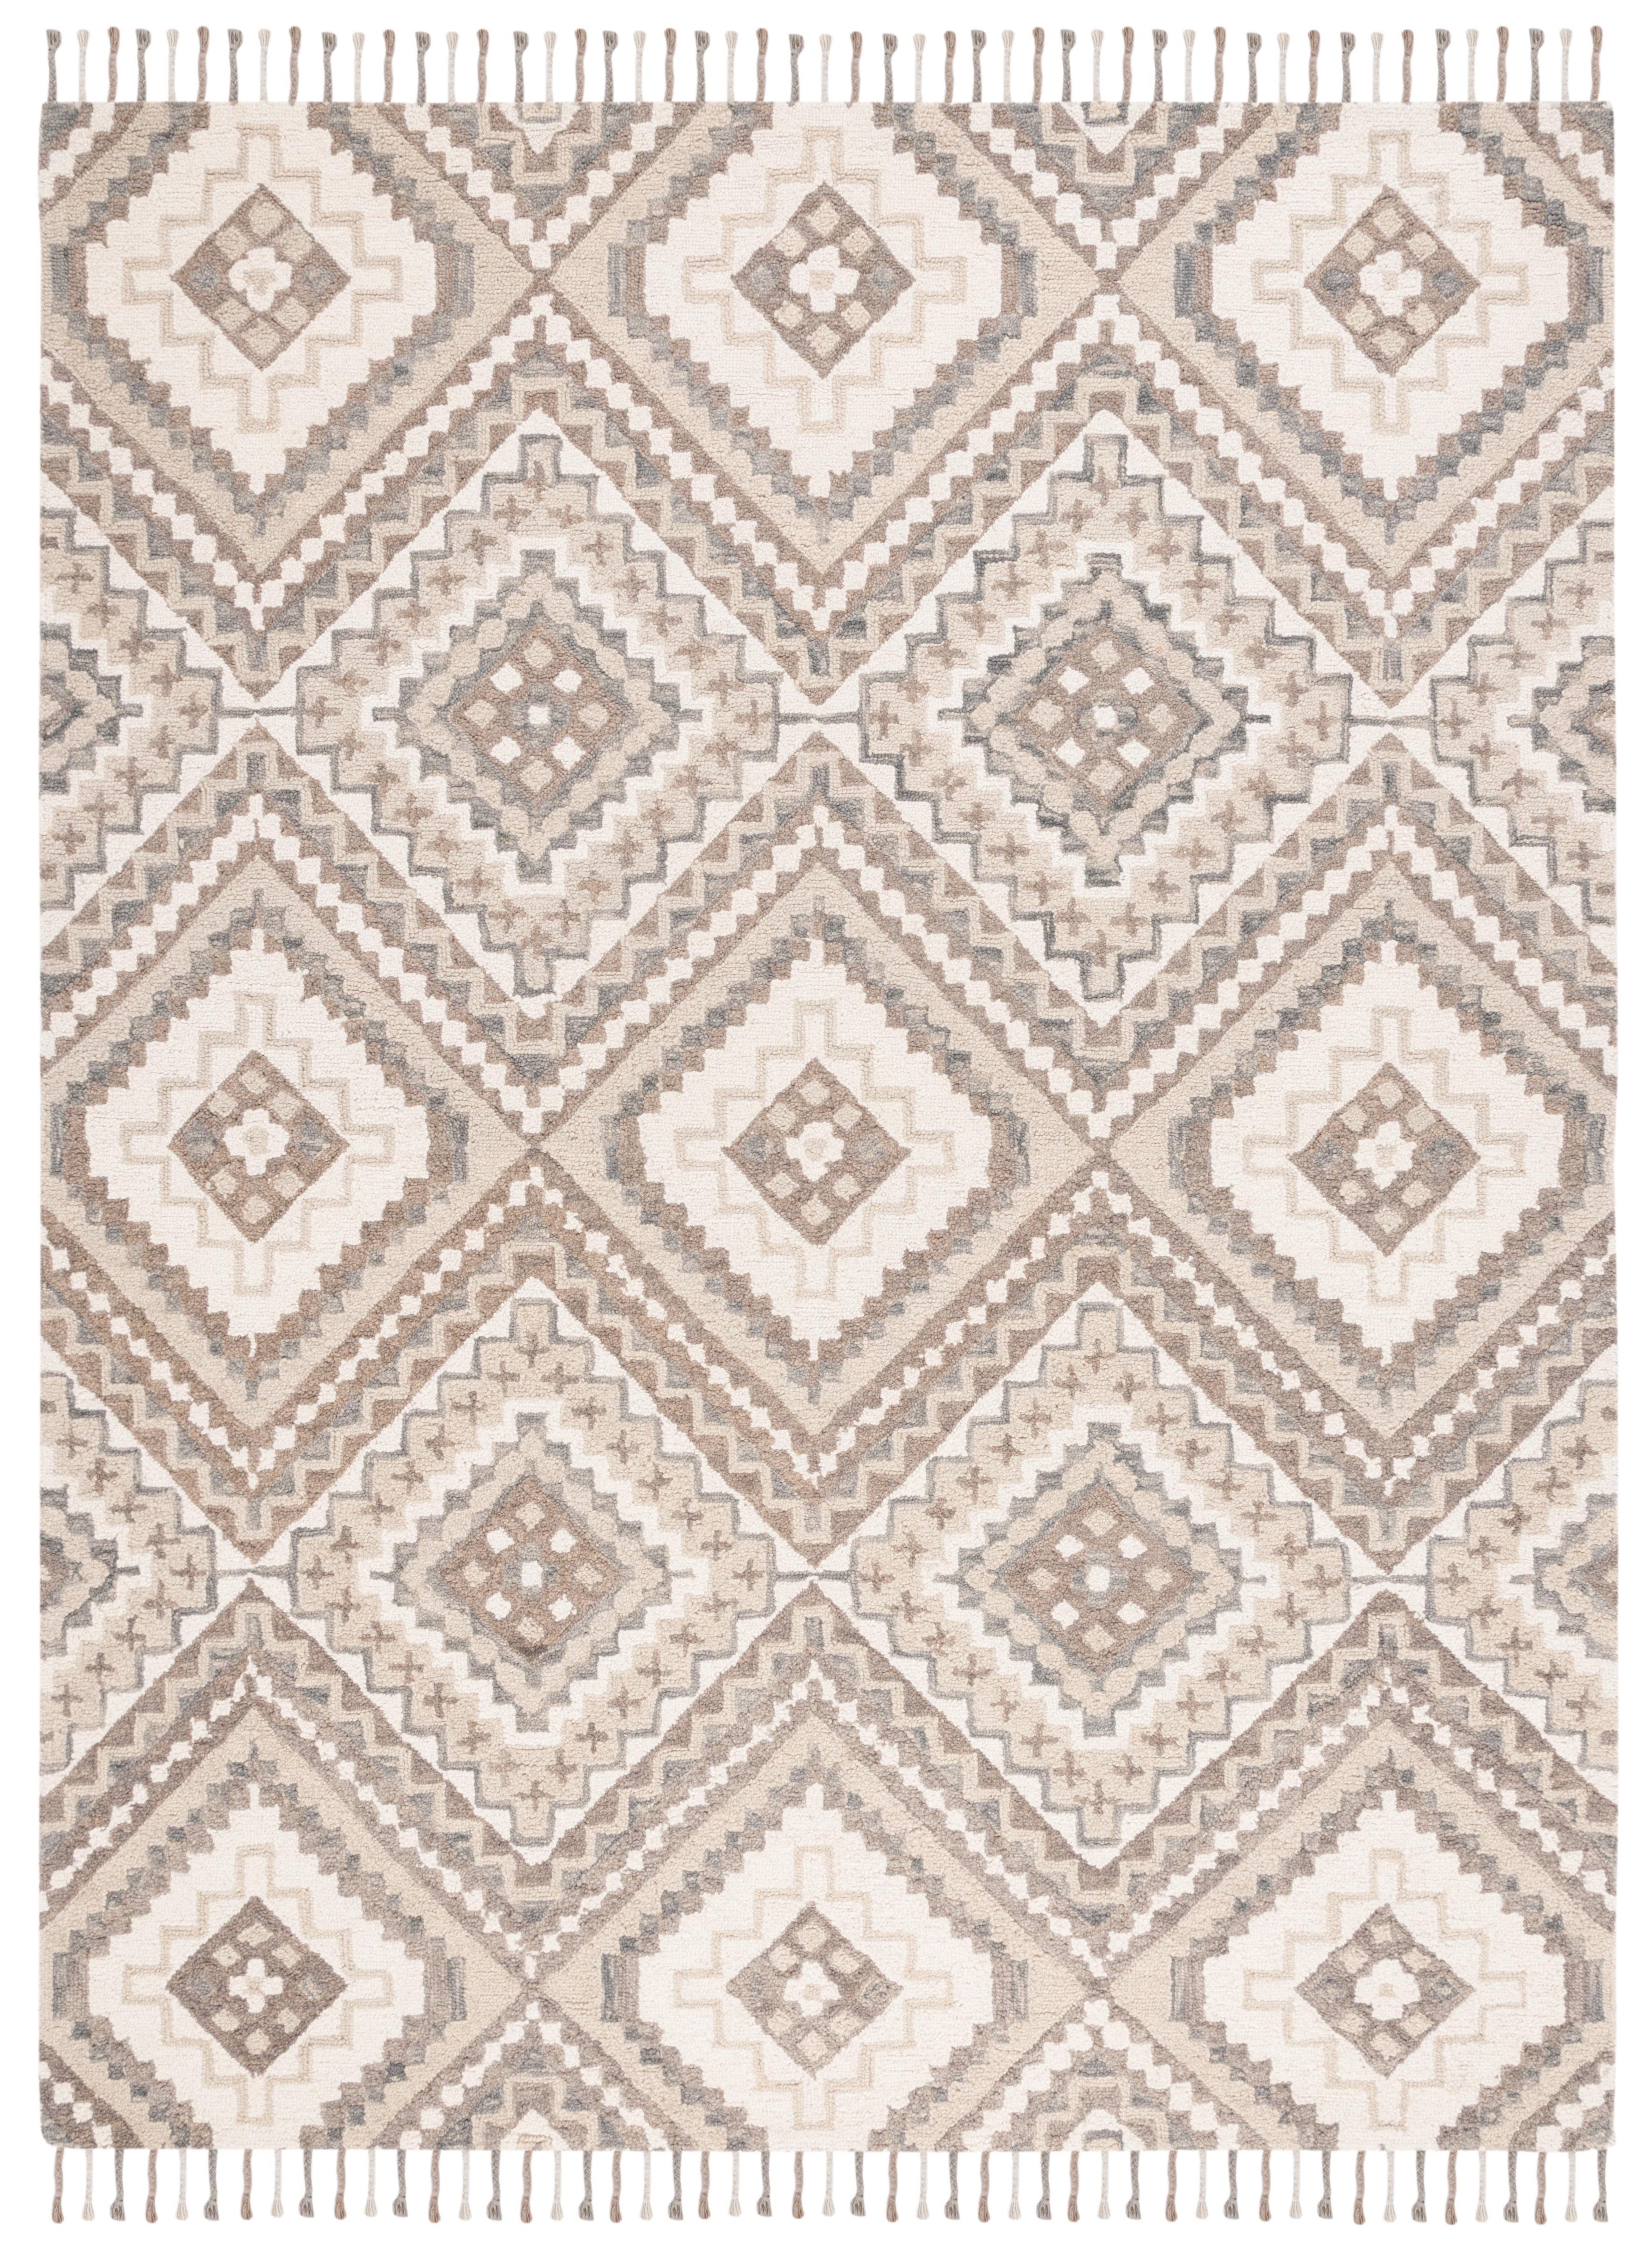 Ivory Geometric Hand-Tufted Wool Area Rug, 10' x 14'